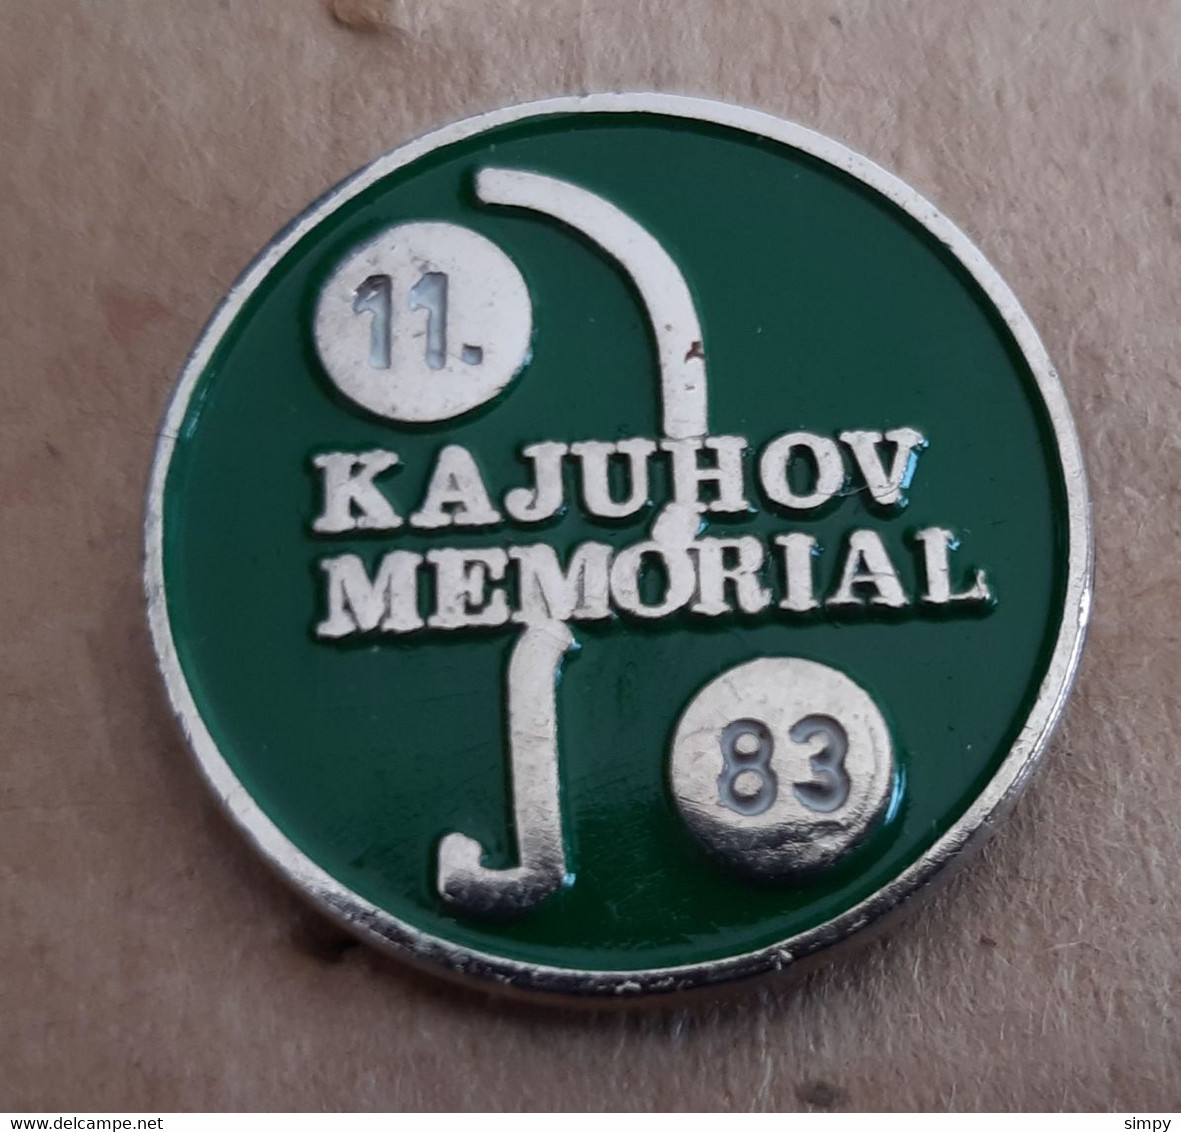 Table Tennis Tournament 11. Kajuhov Memorial  1983 Slovenia Pin Badge - Tafeltennis